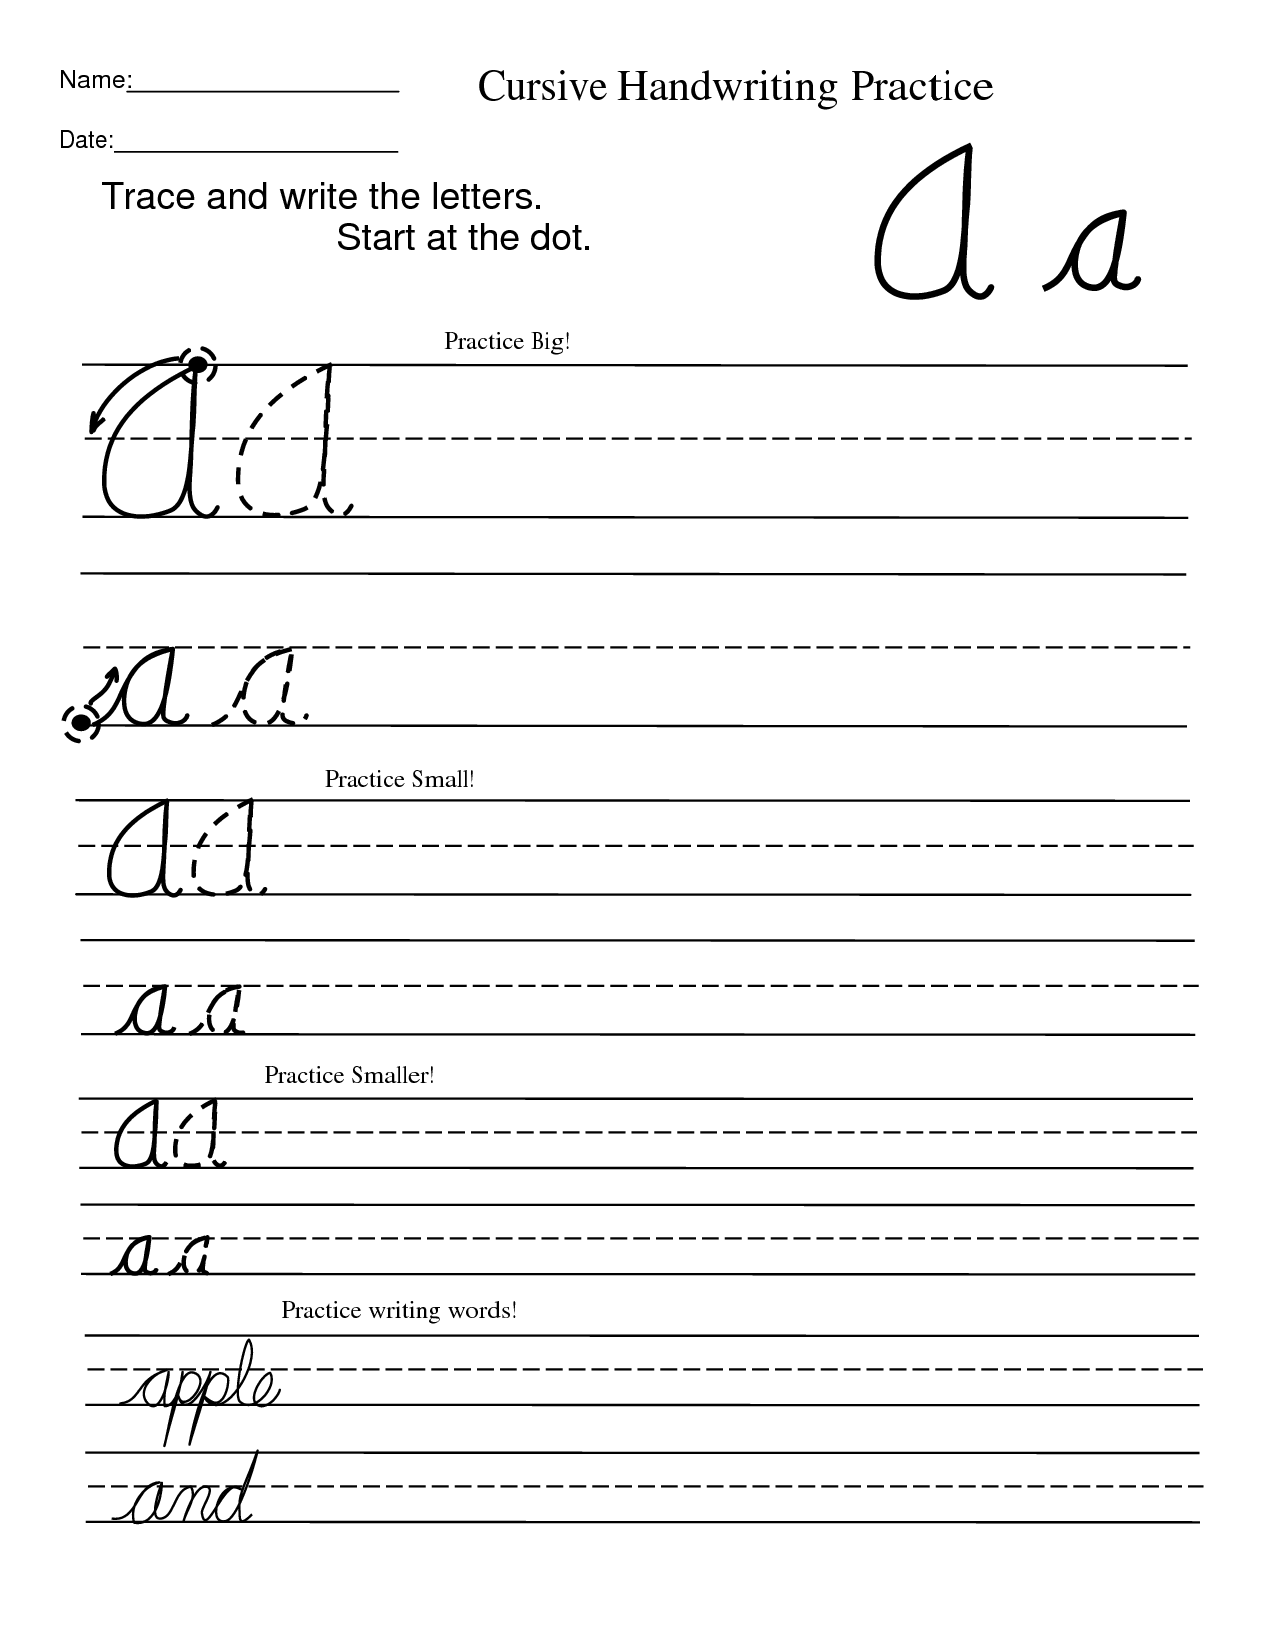 4 Best Images of Cursive Letters Worksheets Printable Free Cursive Writing Worksheet